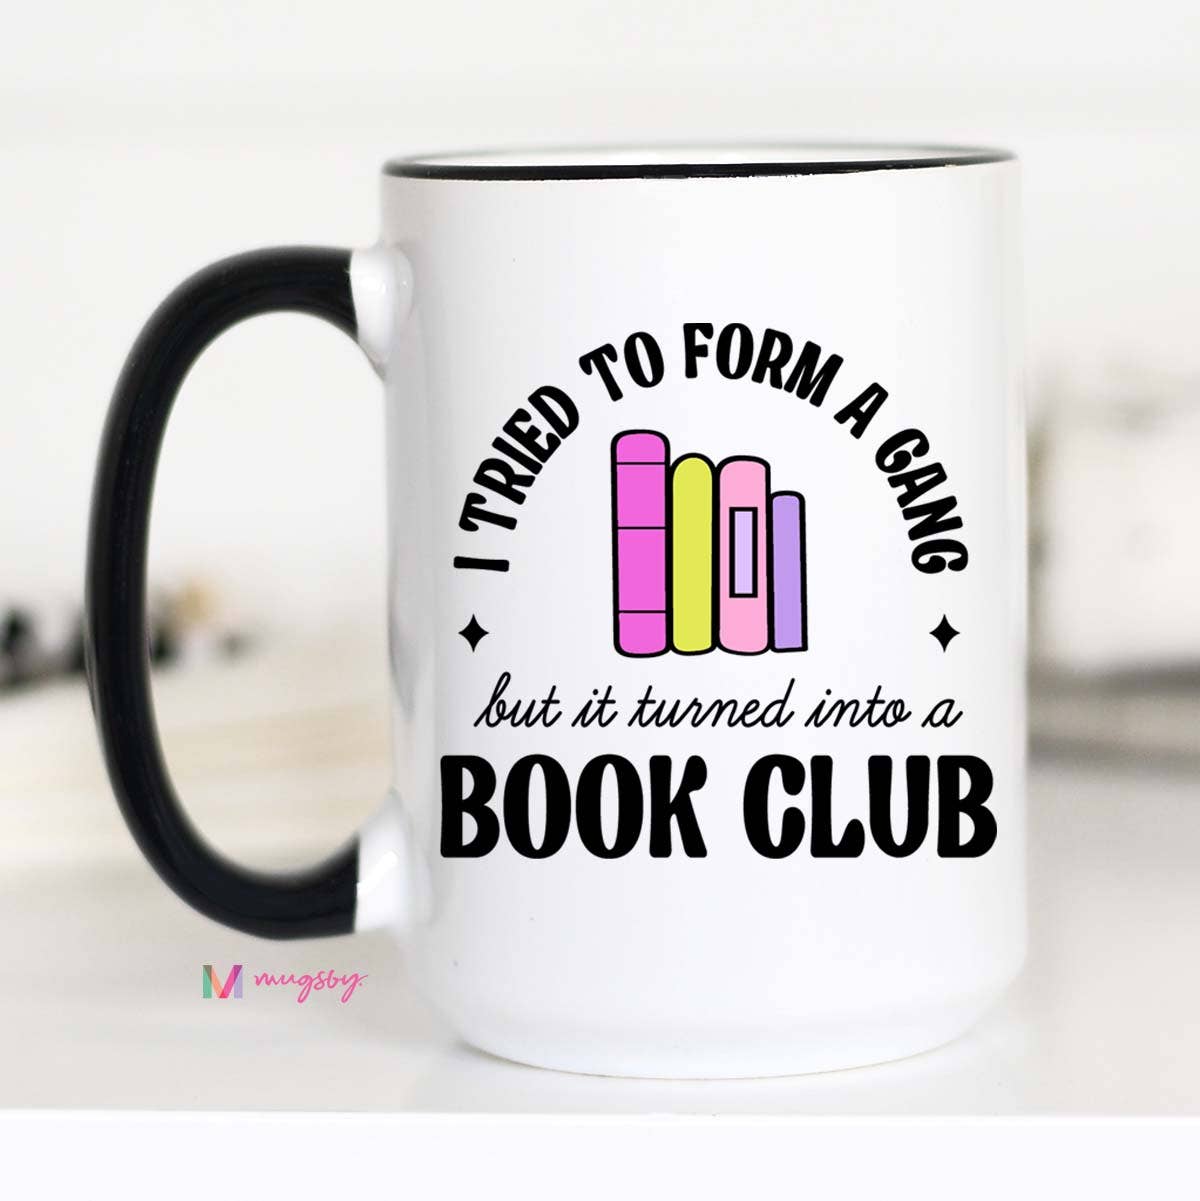 Mugsby - I Tried to Form a Gang Book Club Coffee Mug, Funny Book Mug